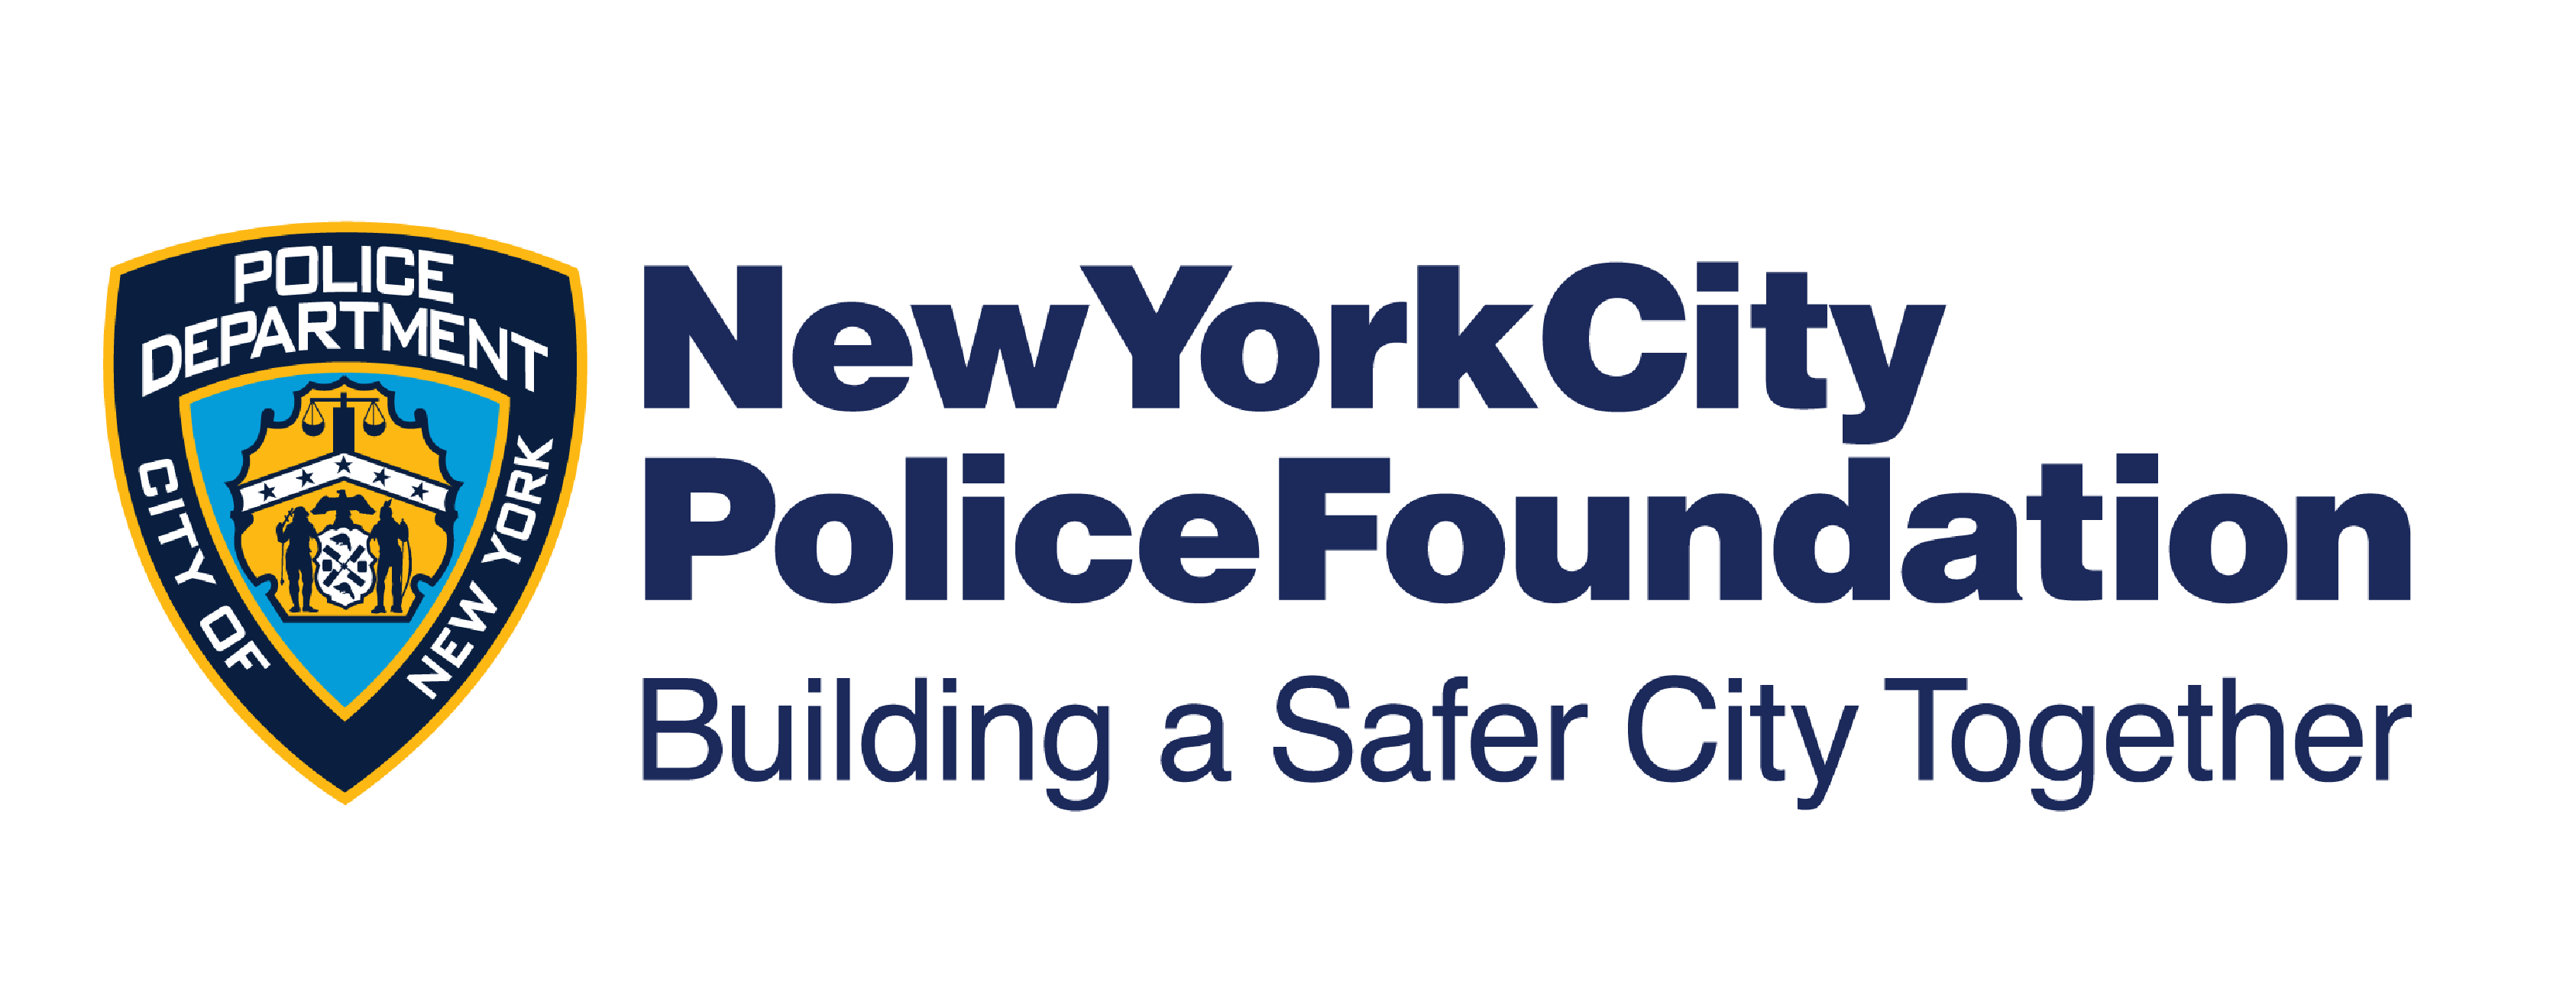 NYC Police Foundation logo